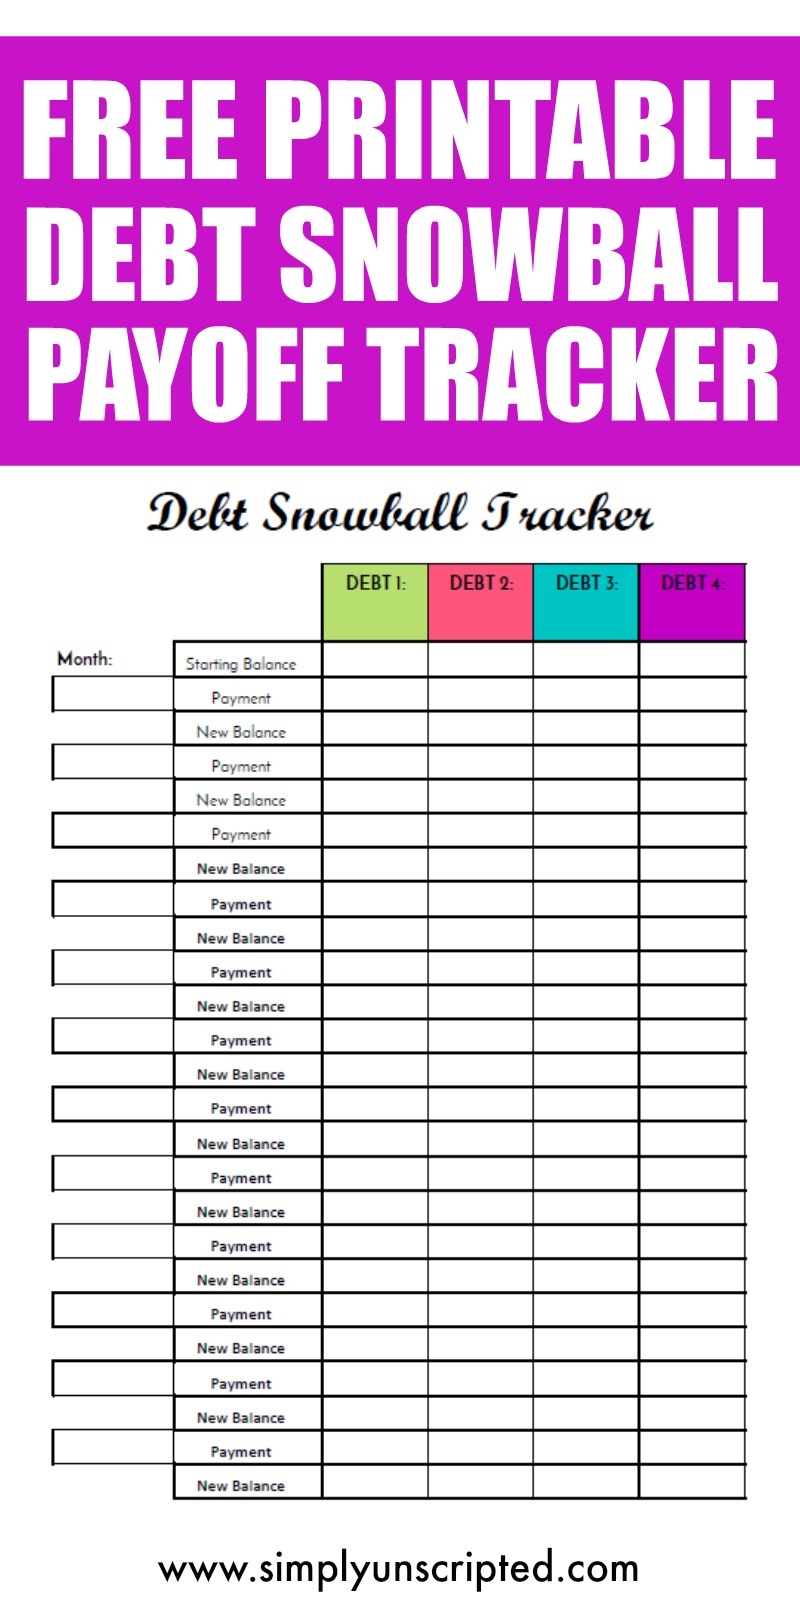 38-debt-snowball-spreadsheets-forms-calculators-free-printable